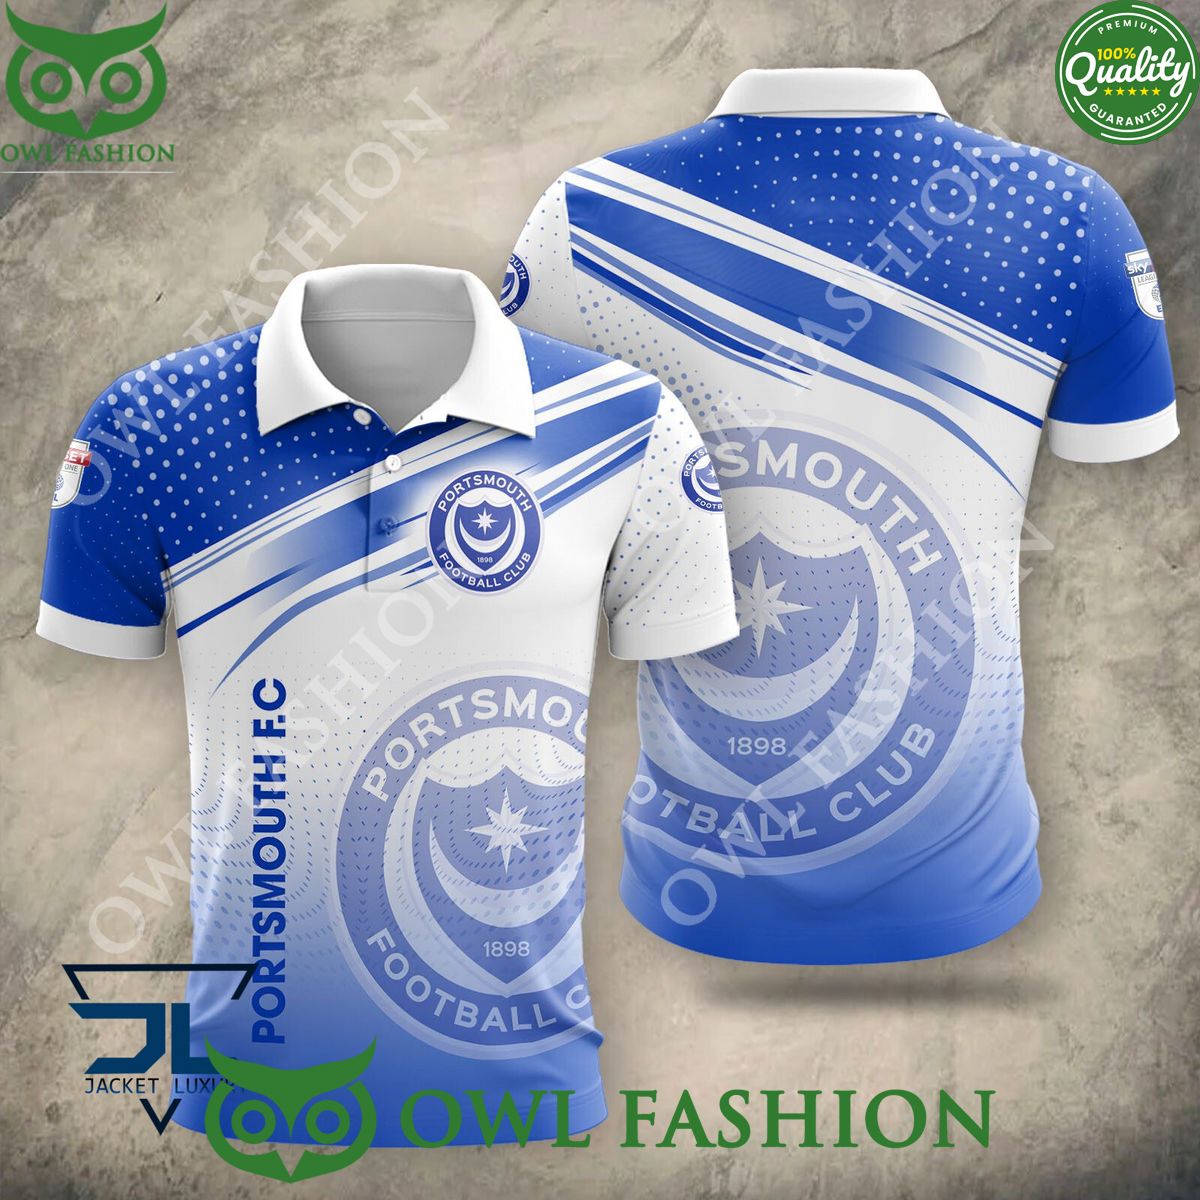 portsmouth f c club logo efl hoodie shirt 8 Bjy5m.jpg